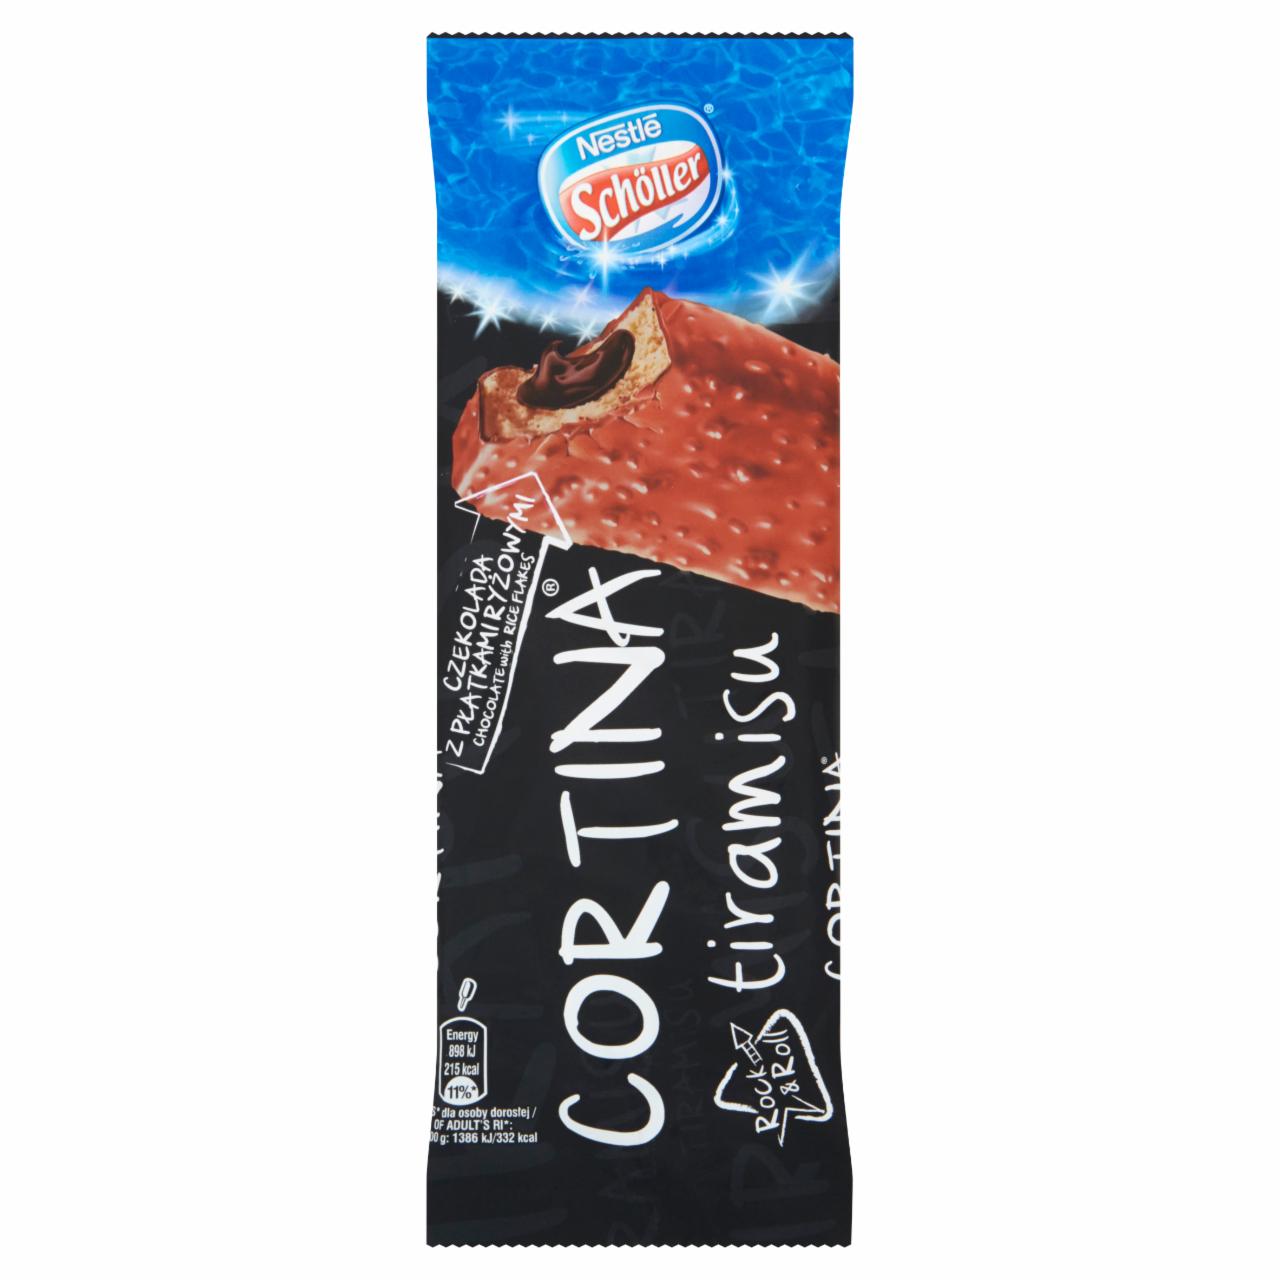 Zdjęcia - Cortina Tiramisu Lody o smaku tiramisu z koktajlem tiramisu oblane czekoladą mleczną 95 ml